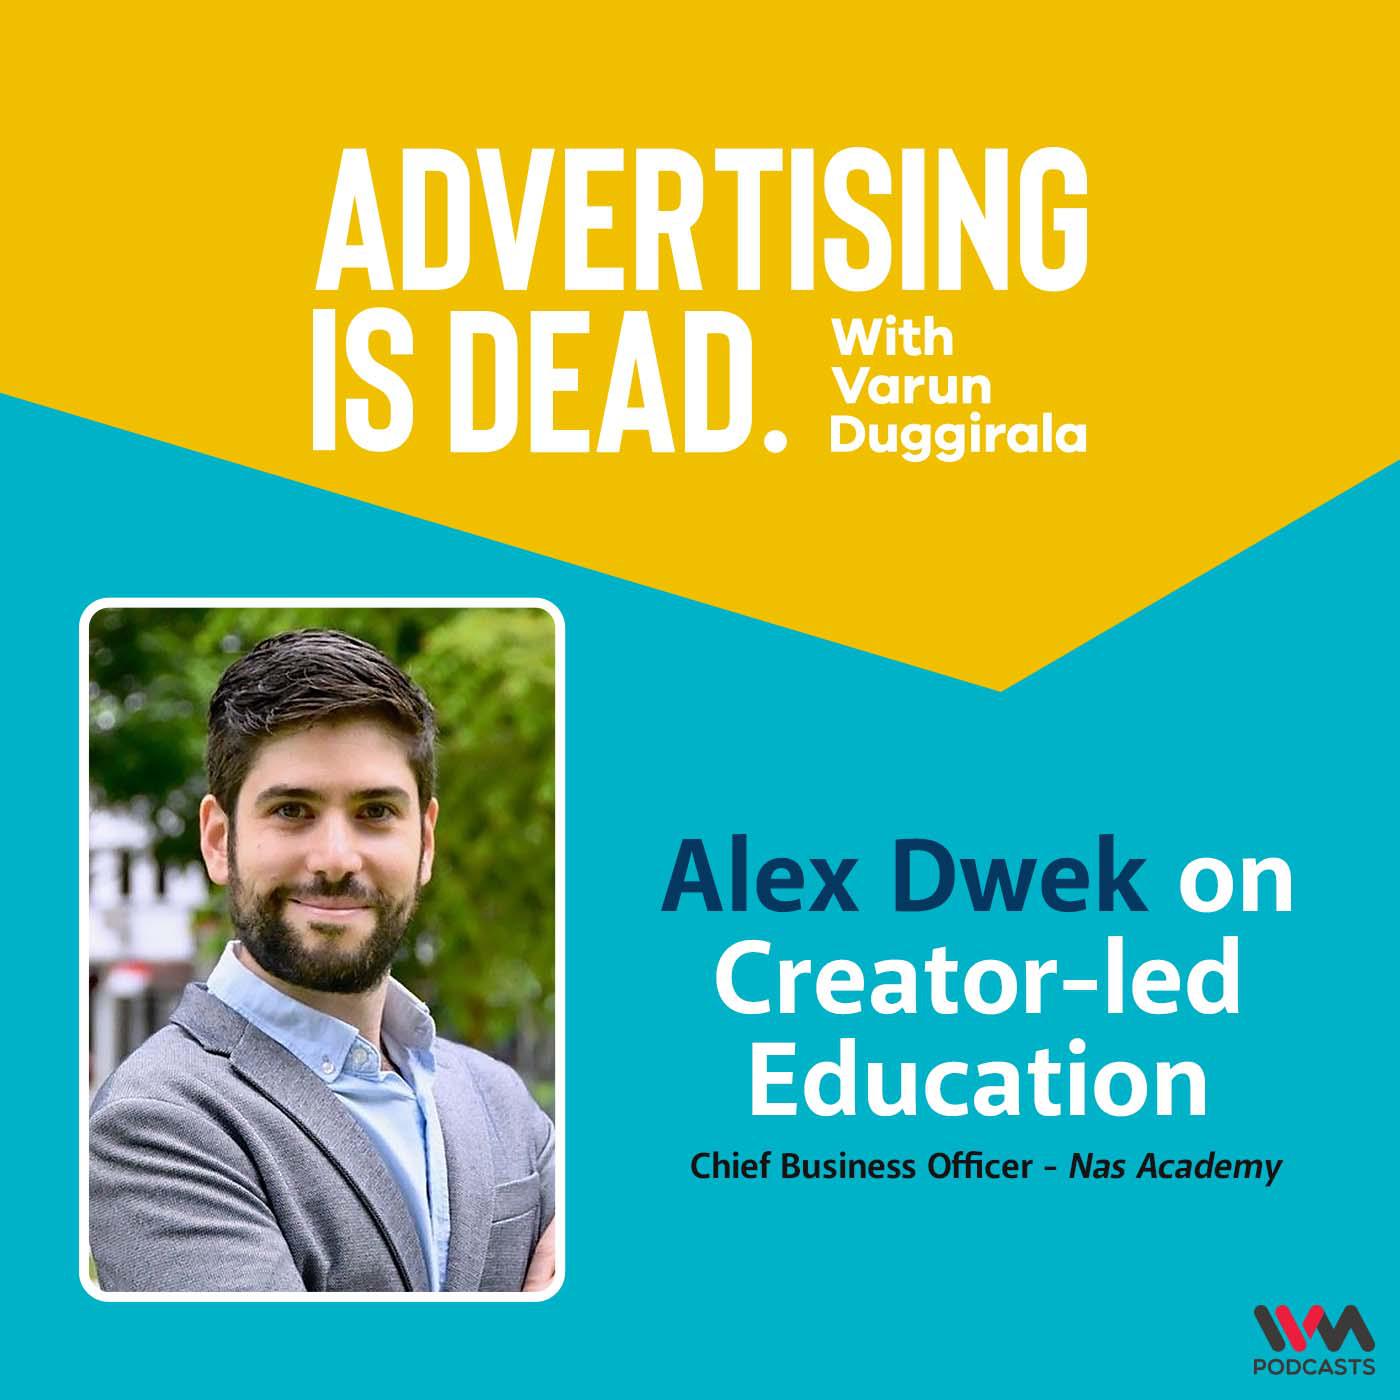 Alex Dwek on Creator-led Education